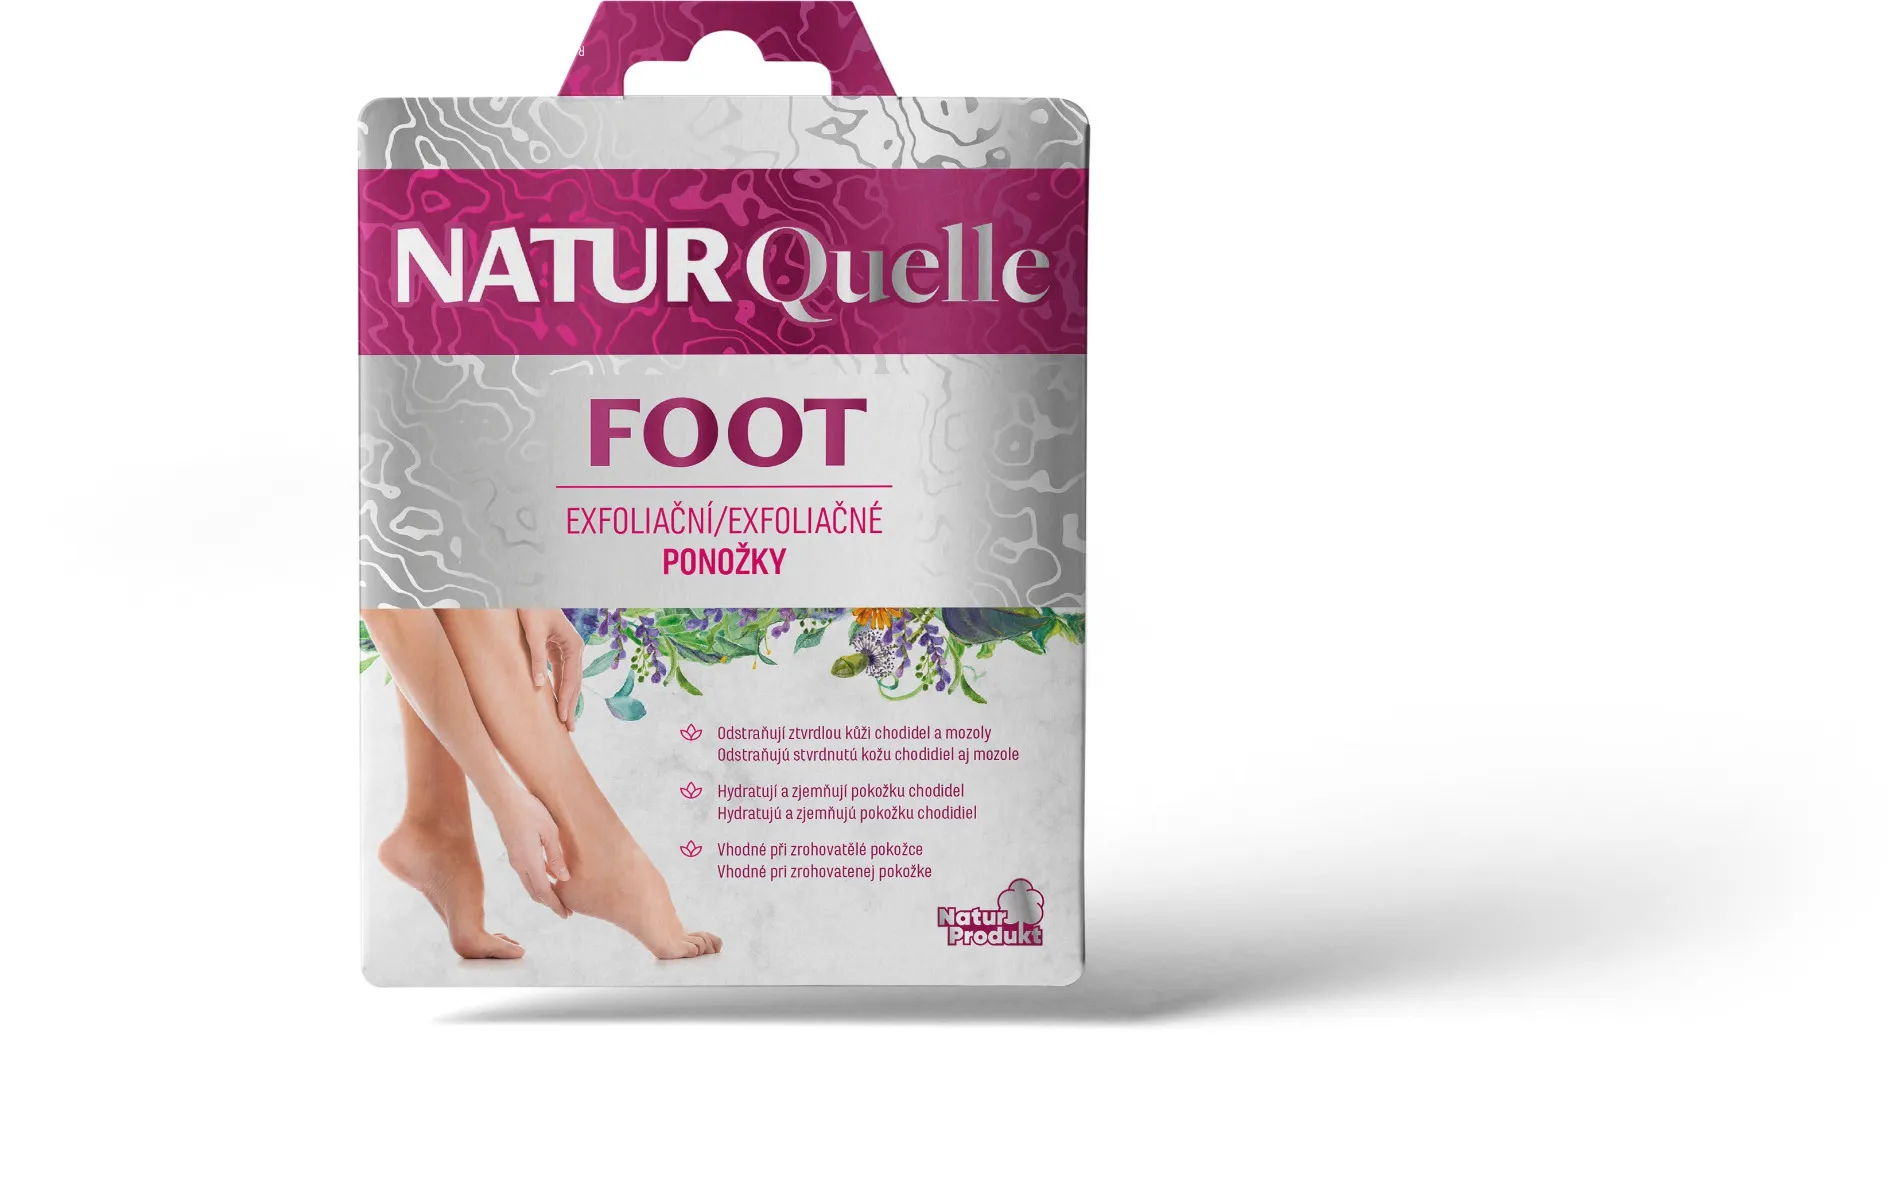 Naturquelle Foot Exfoliačné ponožky